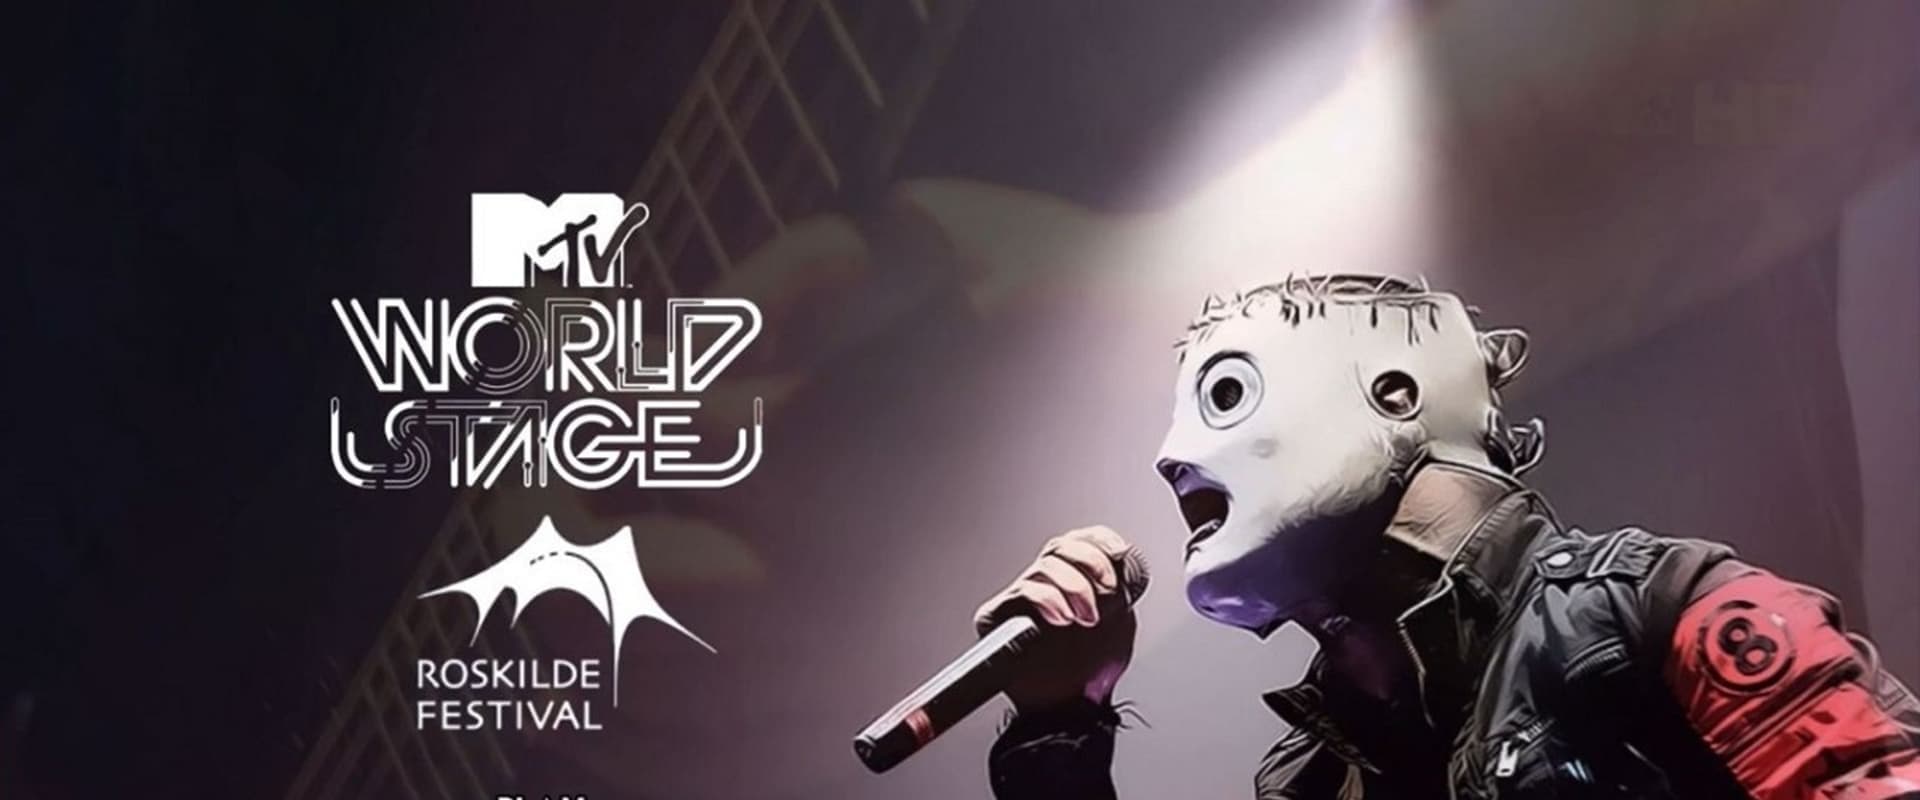 Slipknot: MTV World Stage